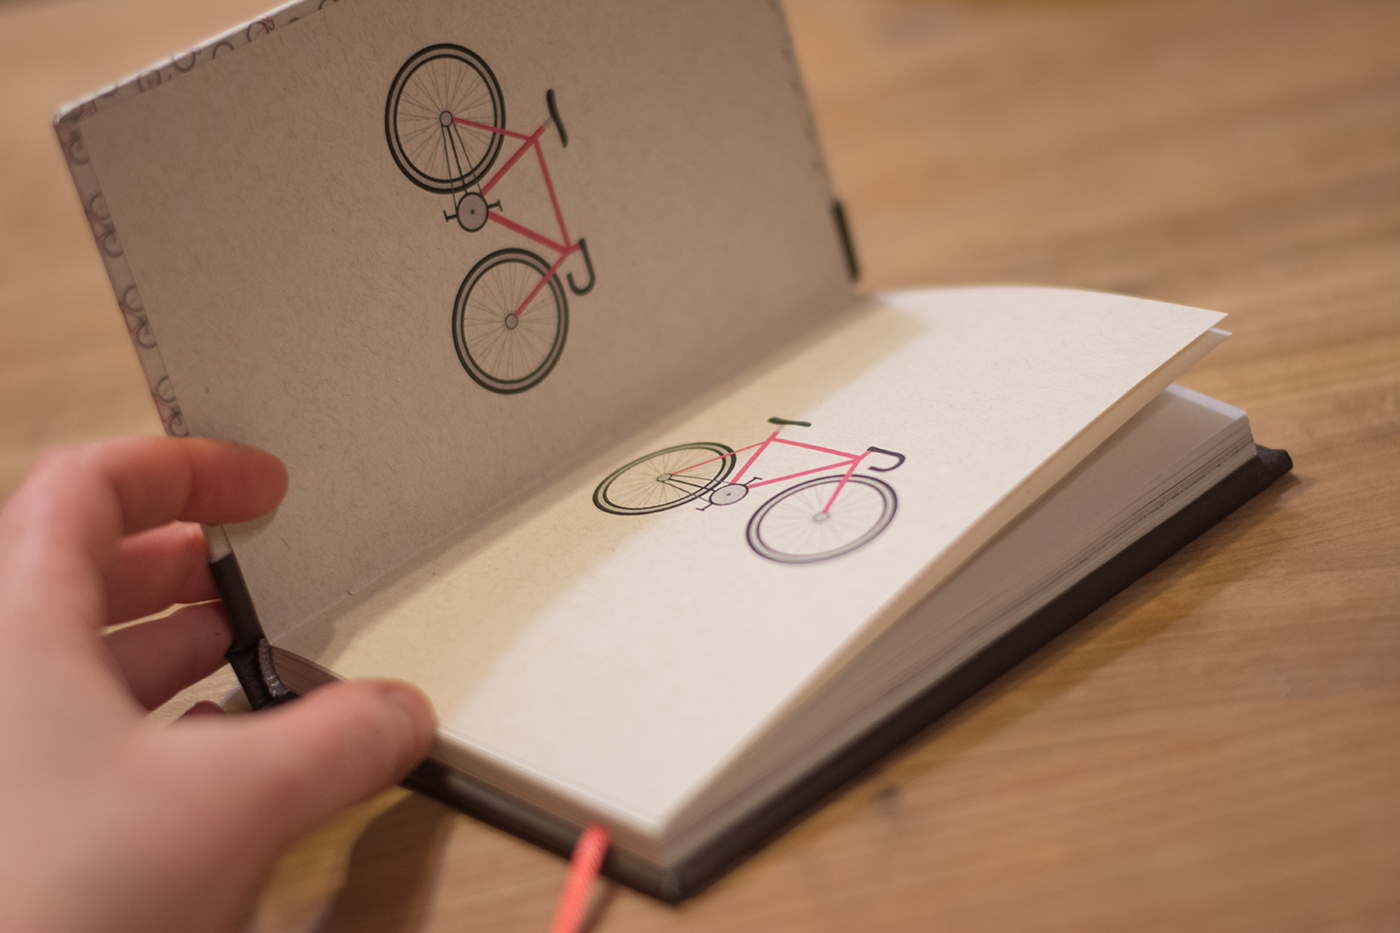 book Bicycle Bookbinding craft handmade gift Editing 